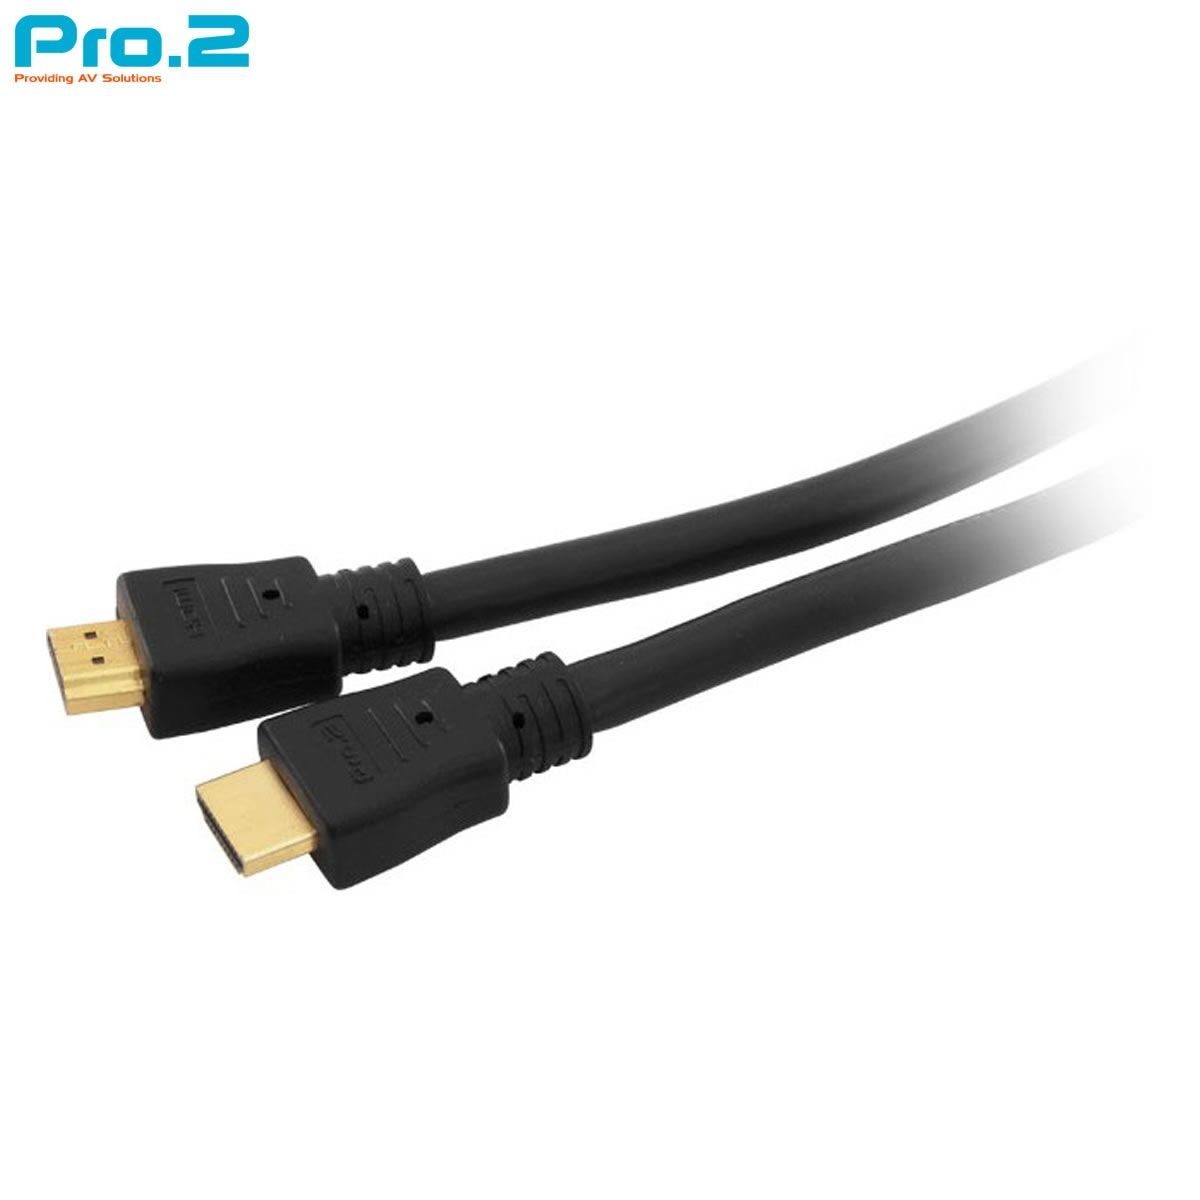 PRO.2 30MT HDMI Contractor Series Cable